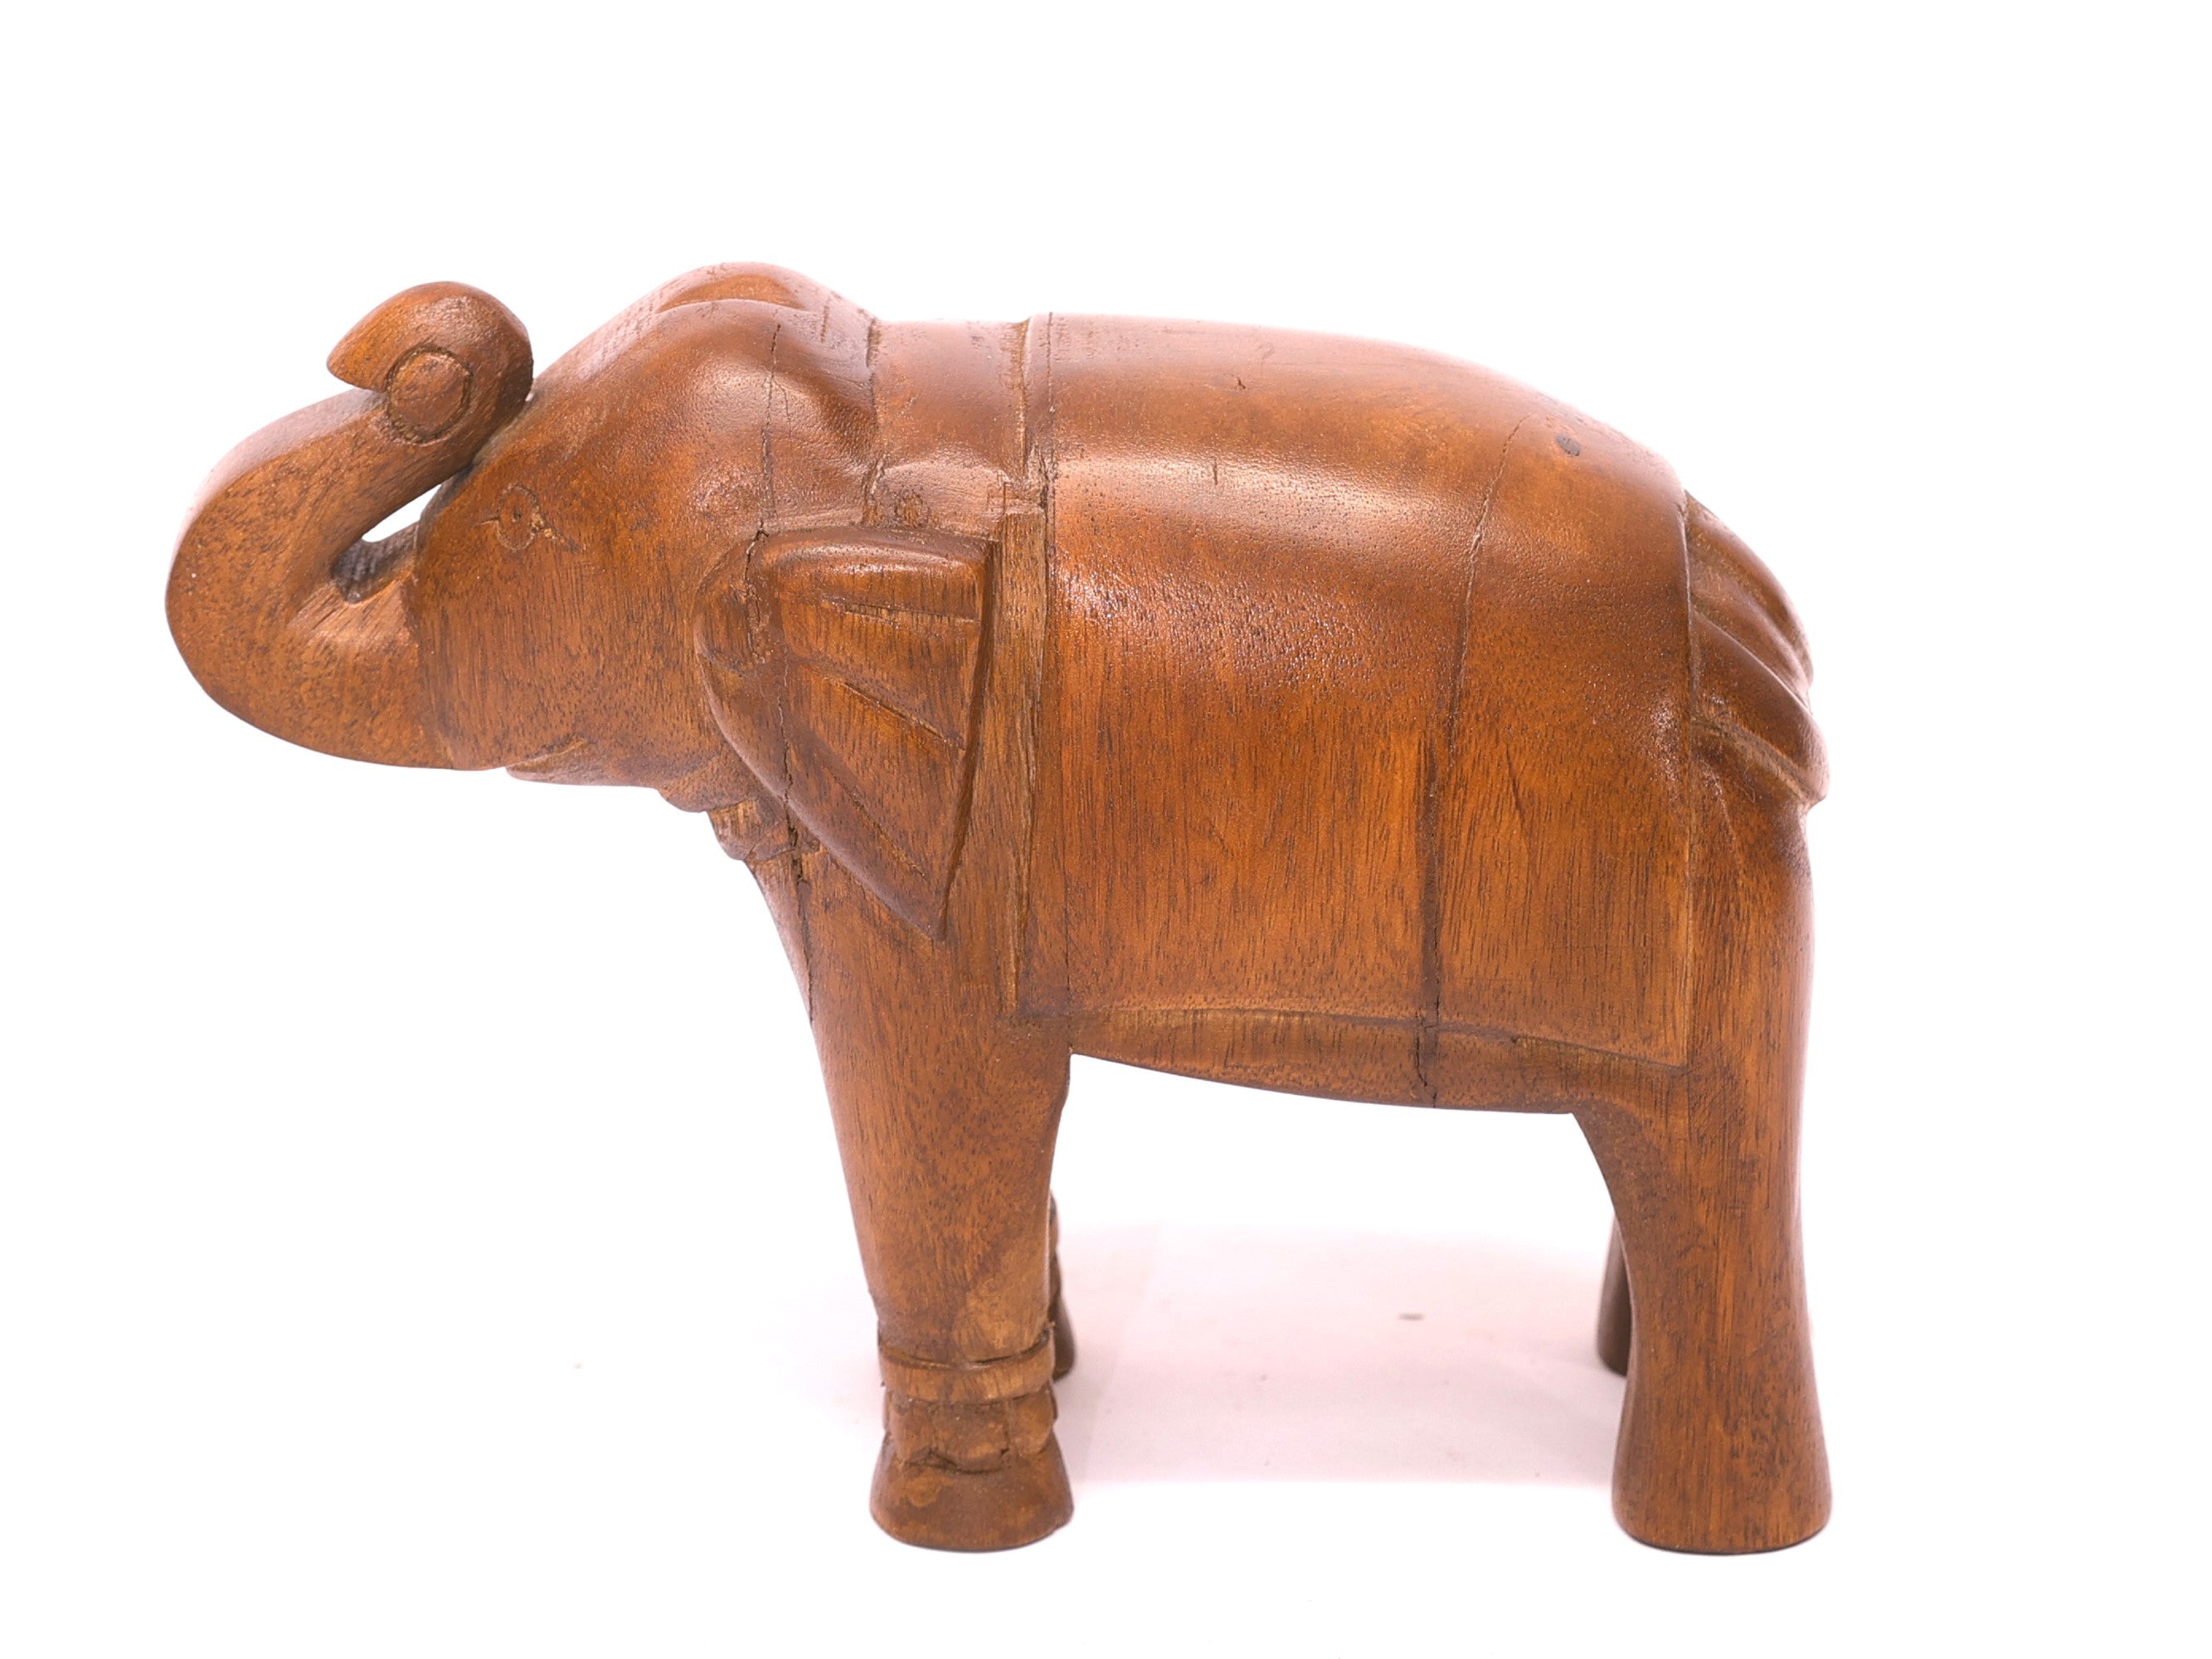 Regal Wooden Carved Elephant Animal Figurine